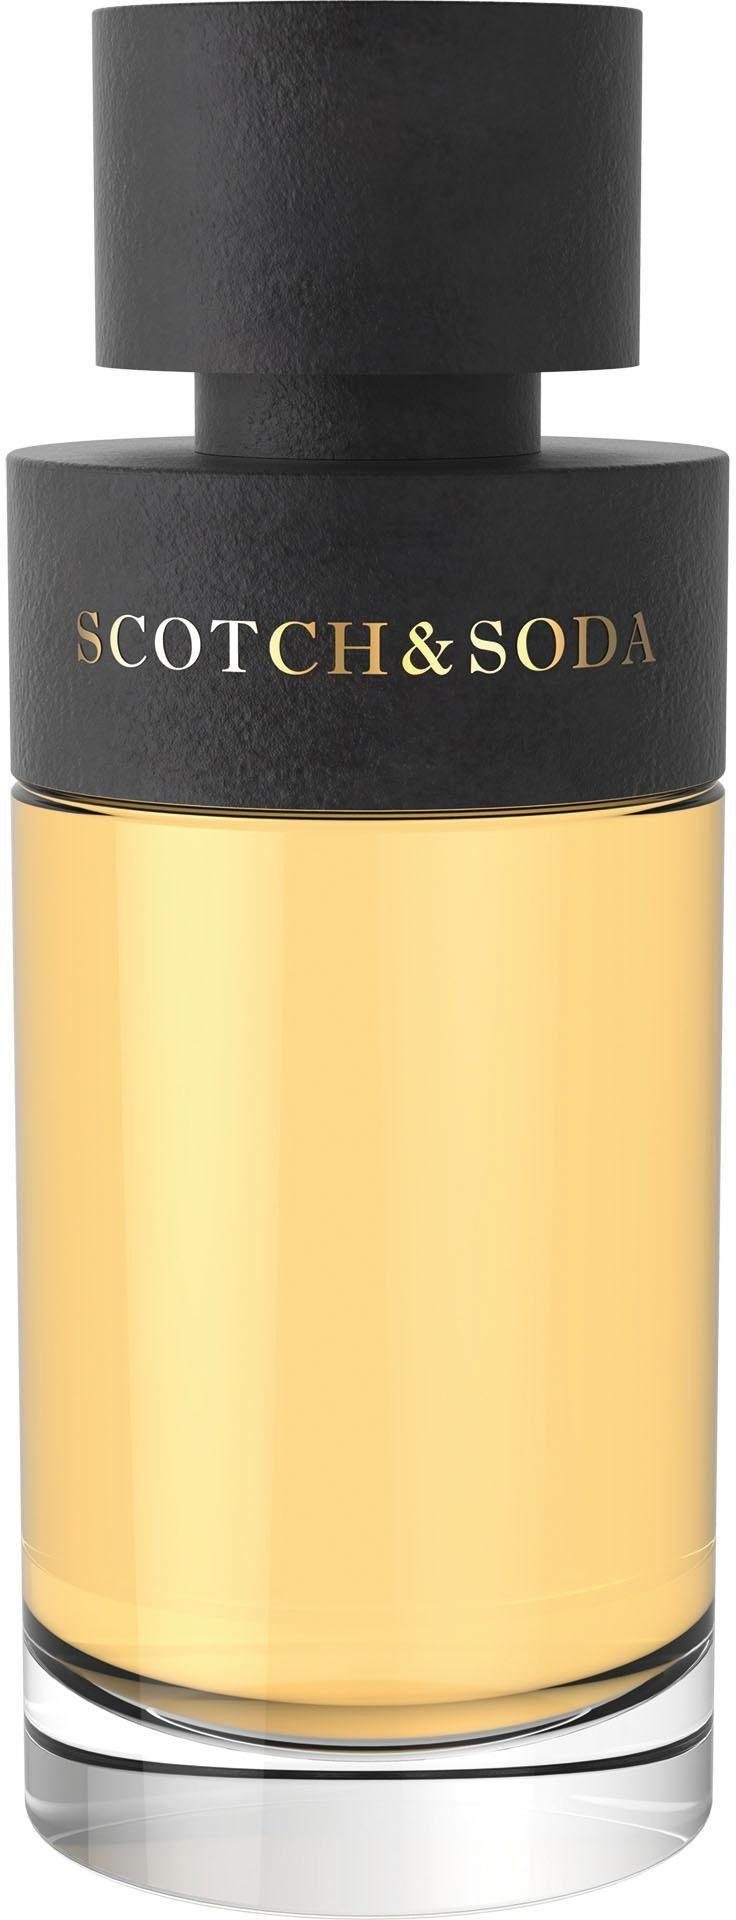 Scotch & Soda Men Eau de Toilette